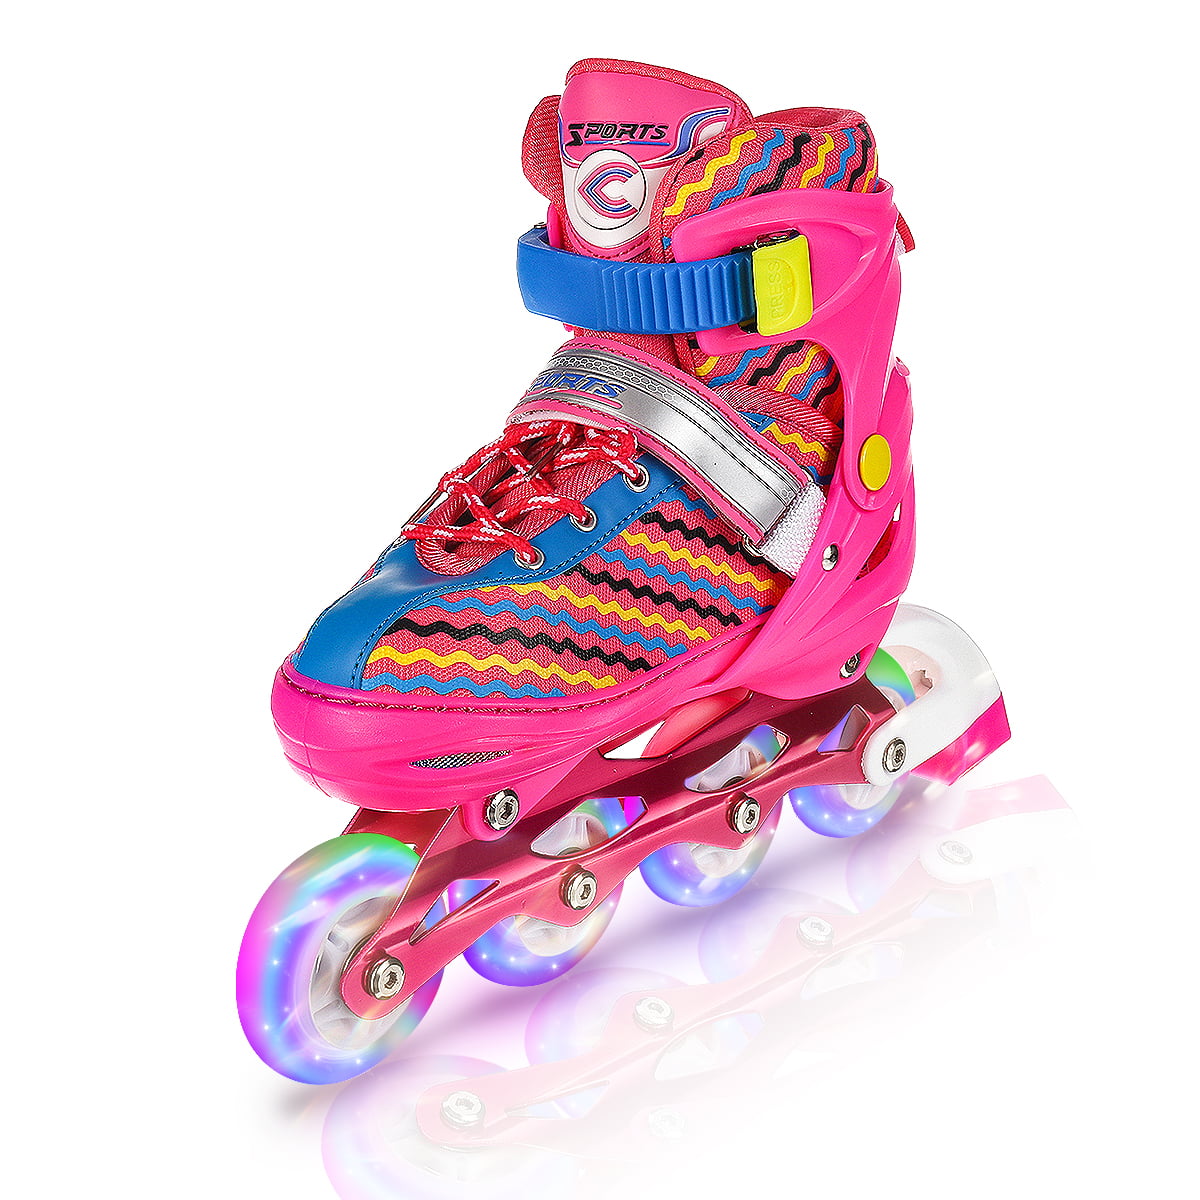 Details about   Kids Roller Adjustable Inline Skates Flashing Wheel Safety cap Protective pad 